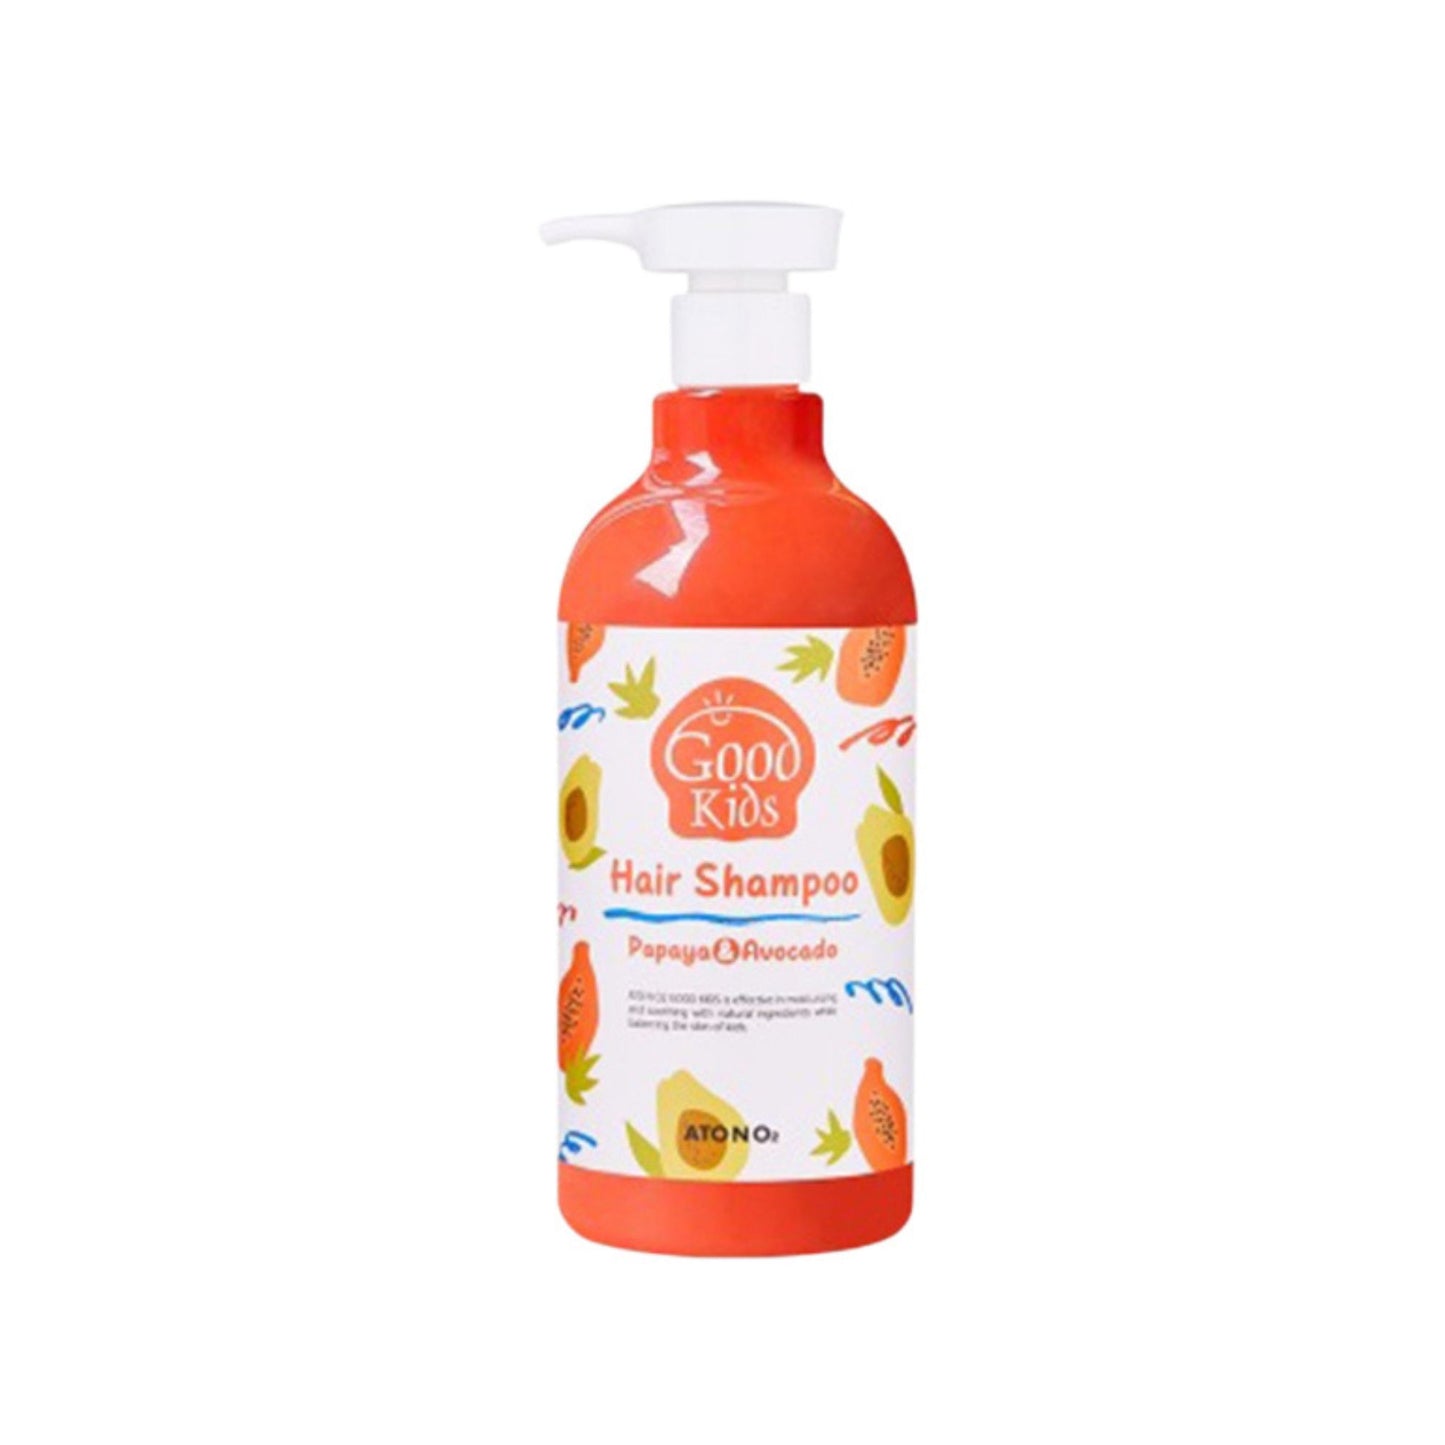 Atono2 Good Kids Series (Shampoo / Conditioner / Body Wash / Facial Wash / Hair Wax / Hair Essence)